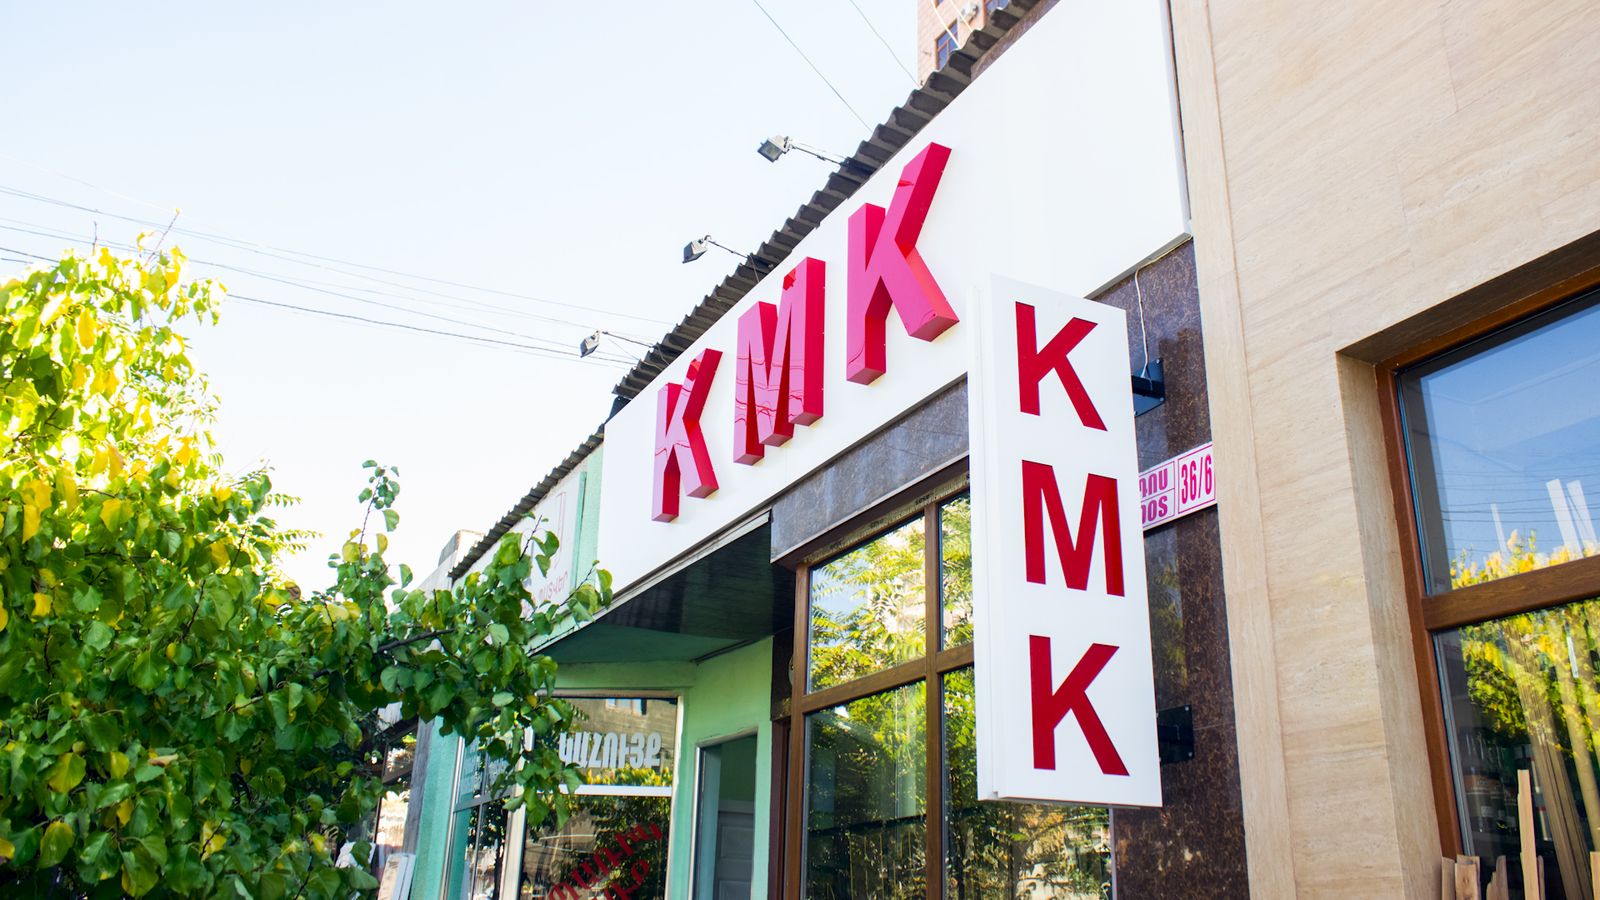 kmk lightbox and illuminated letters